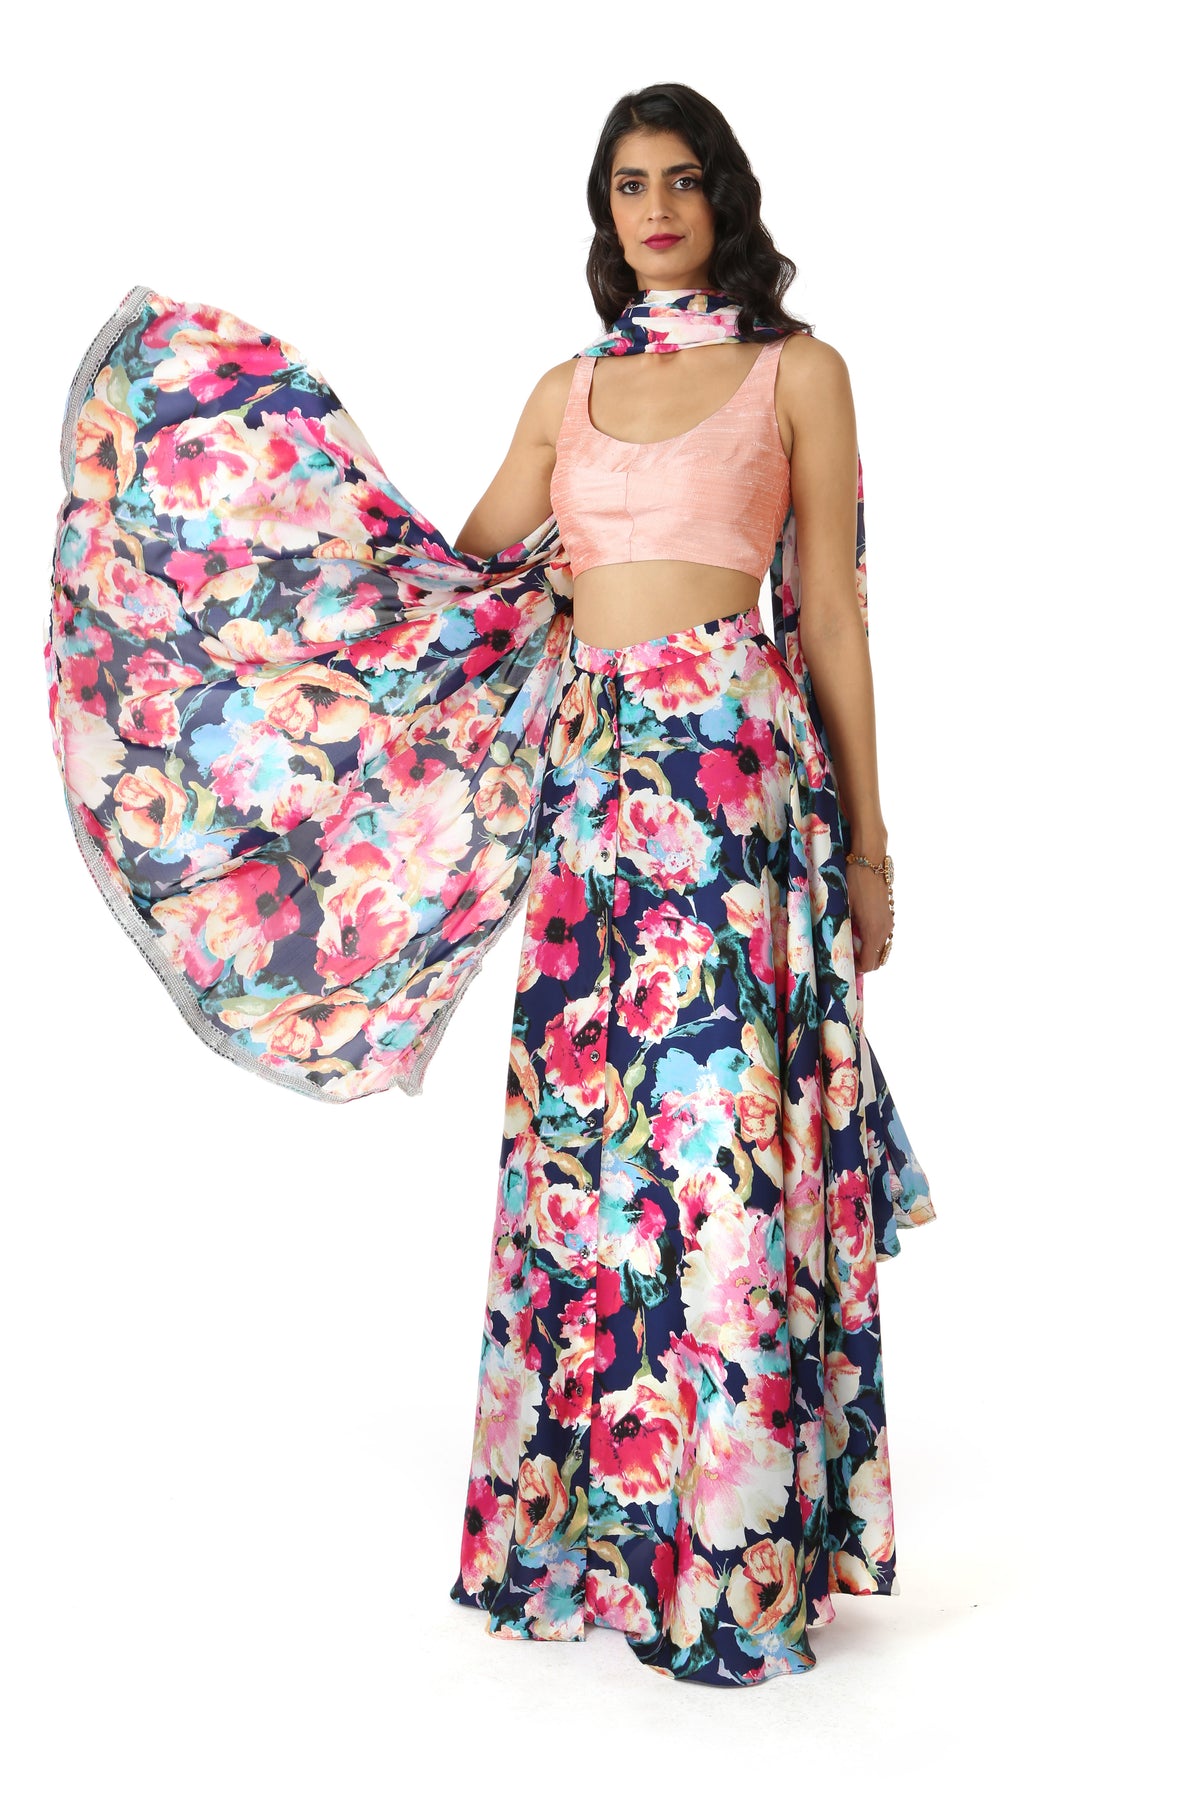 Harleen Kaur GINA Floral Dupatta in Navy Multi with Satin Floral Lehenga Skirt with Slit